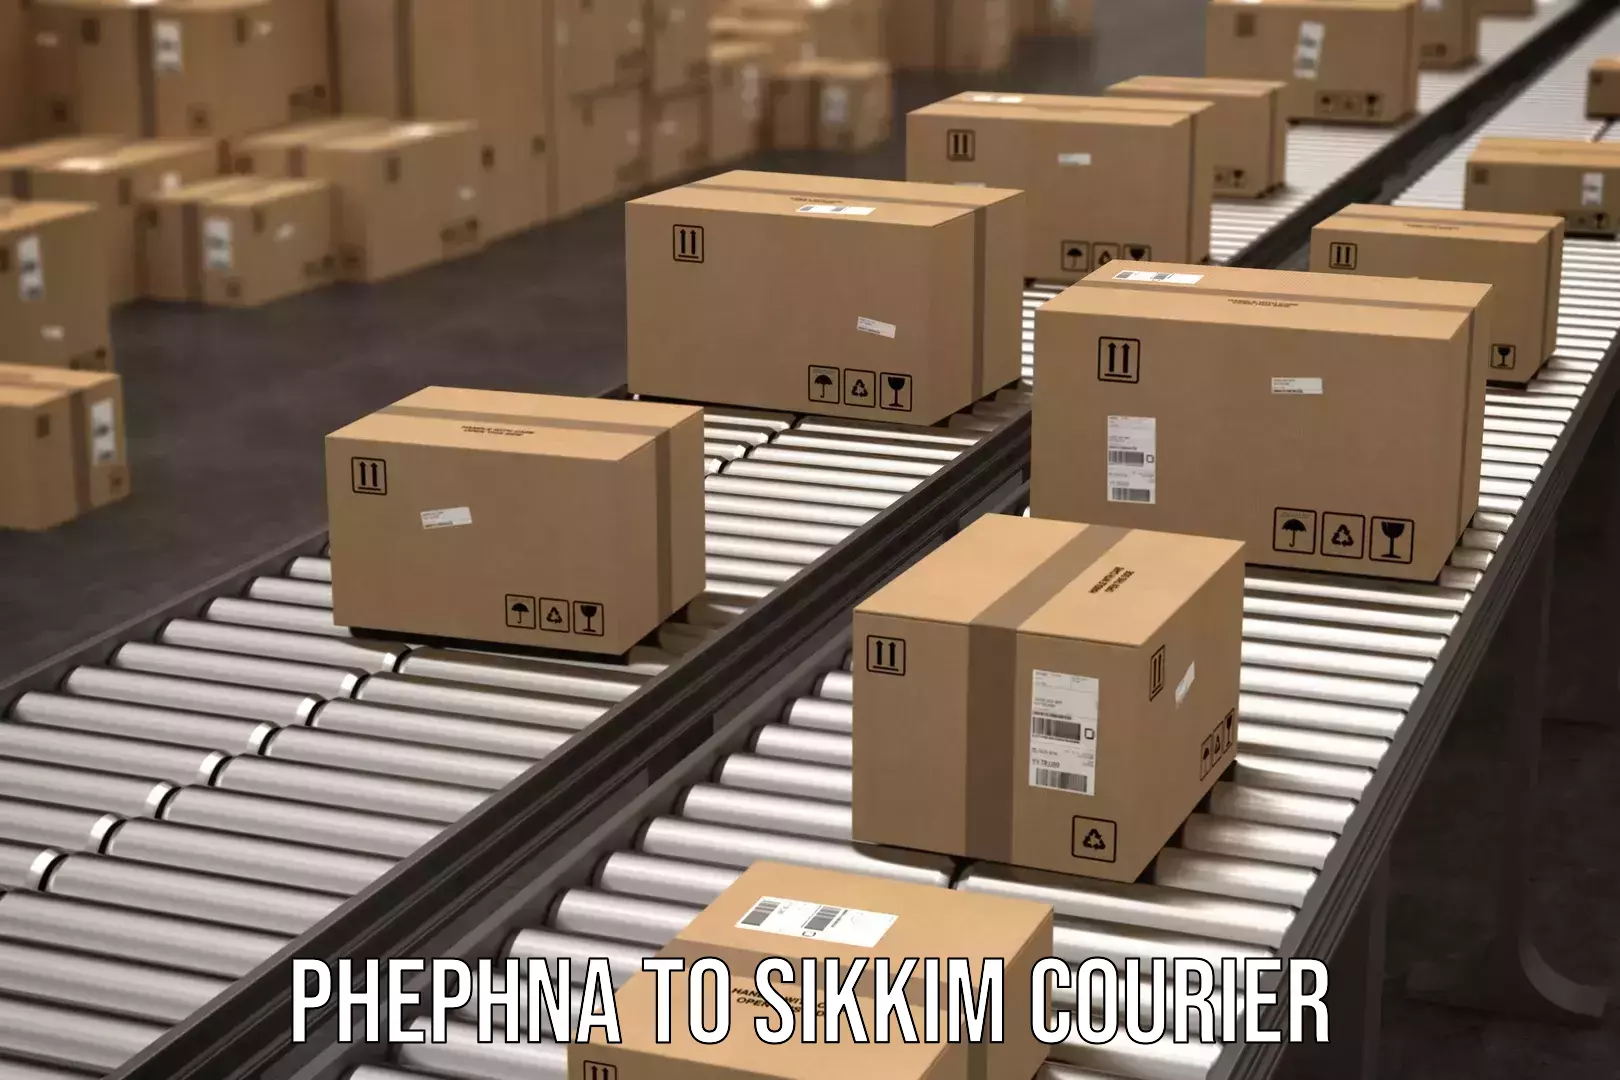 E-commerce fulfillment Phephna to South Sikkim